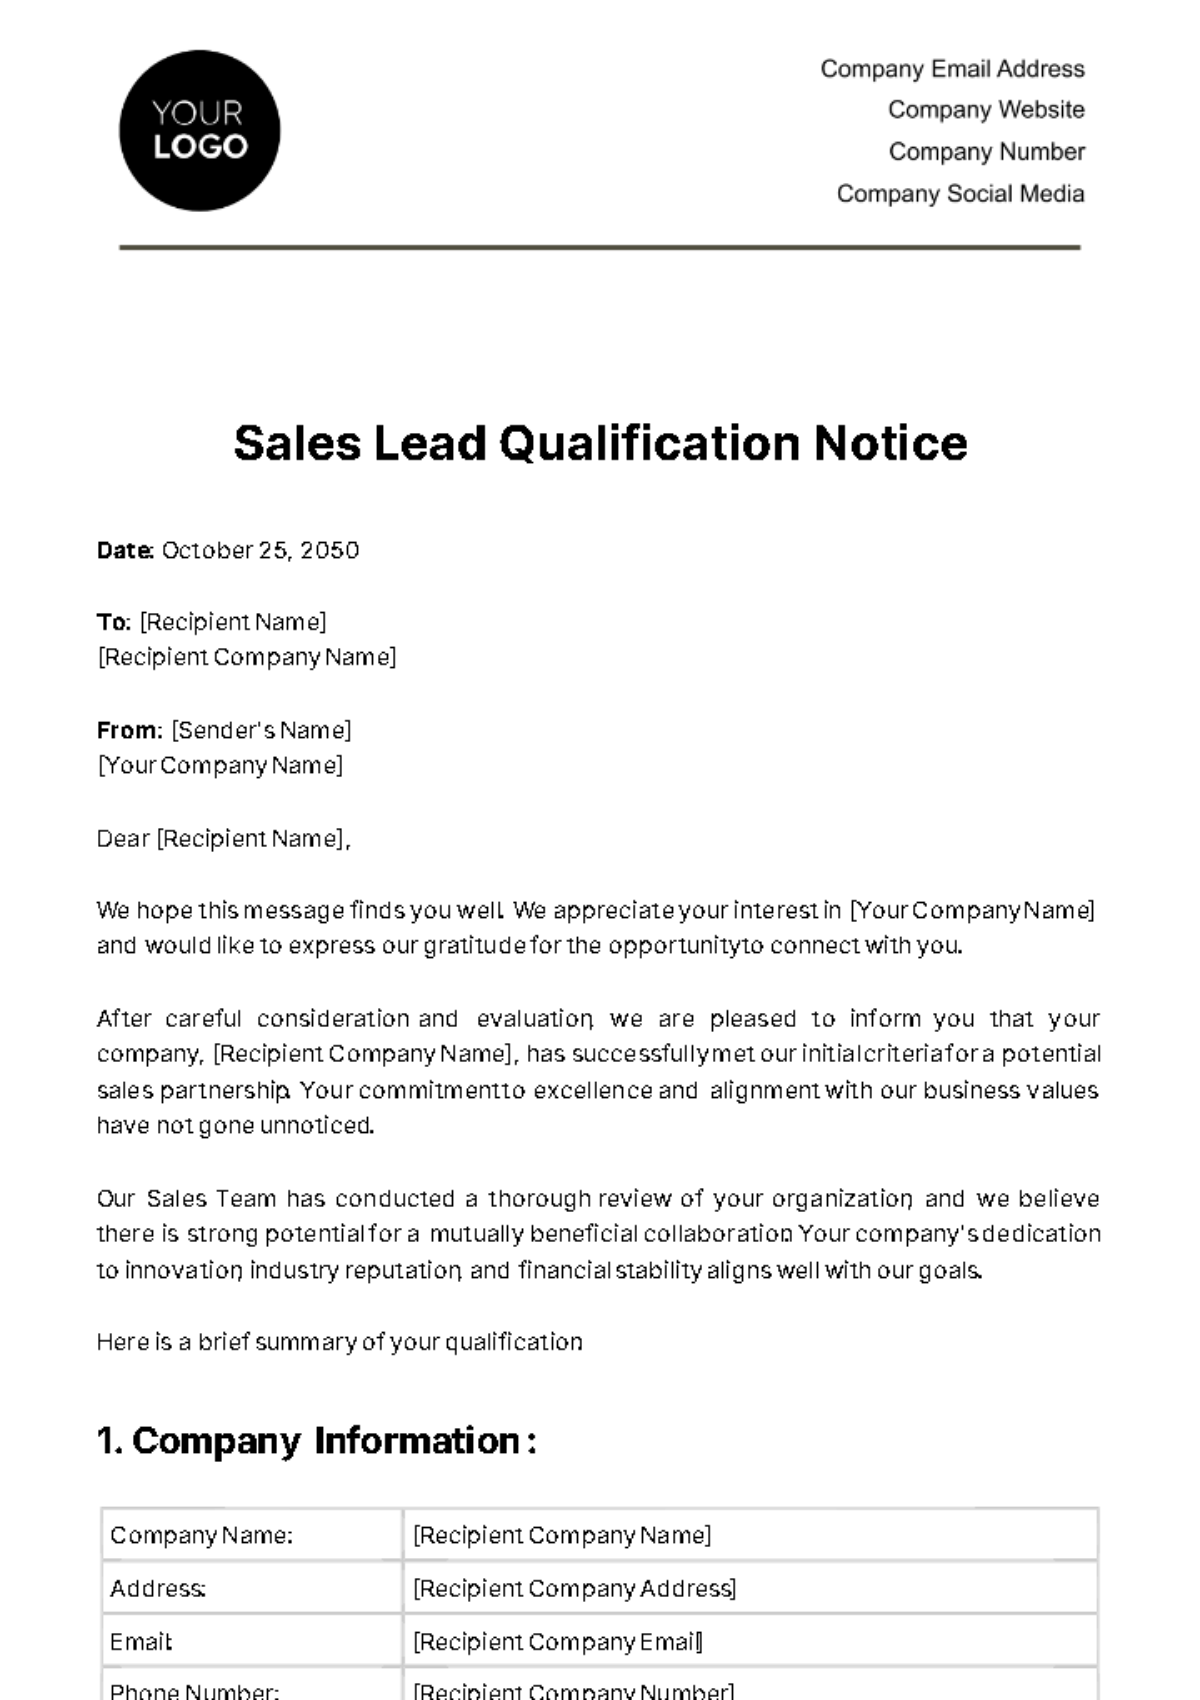 Sales Lead Qualification Notice Template